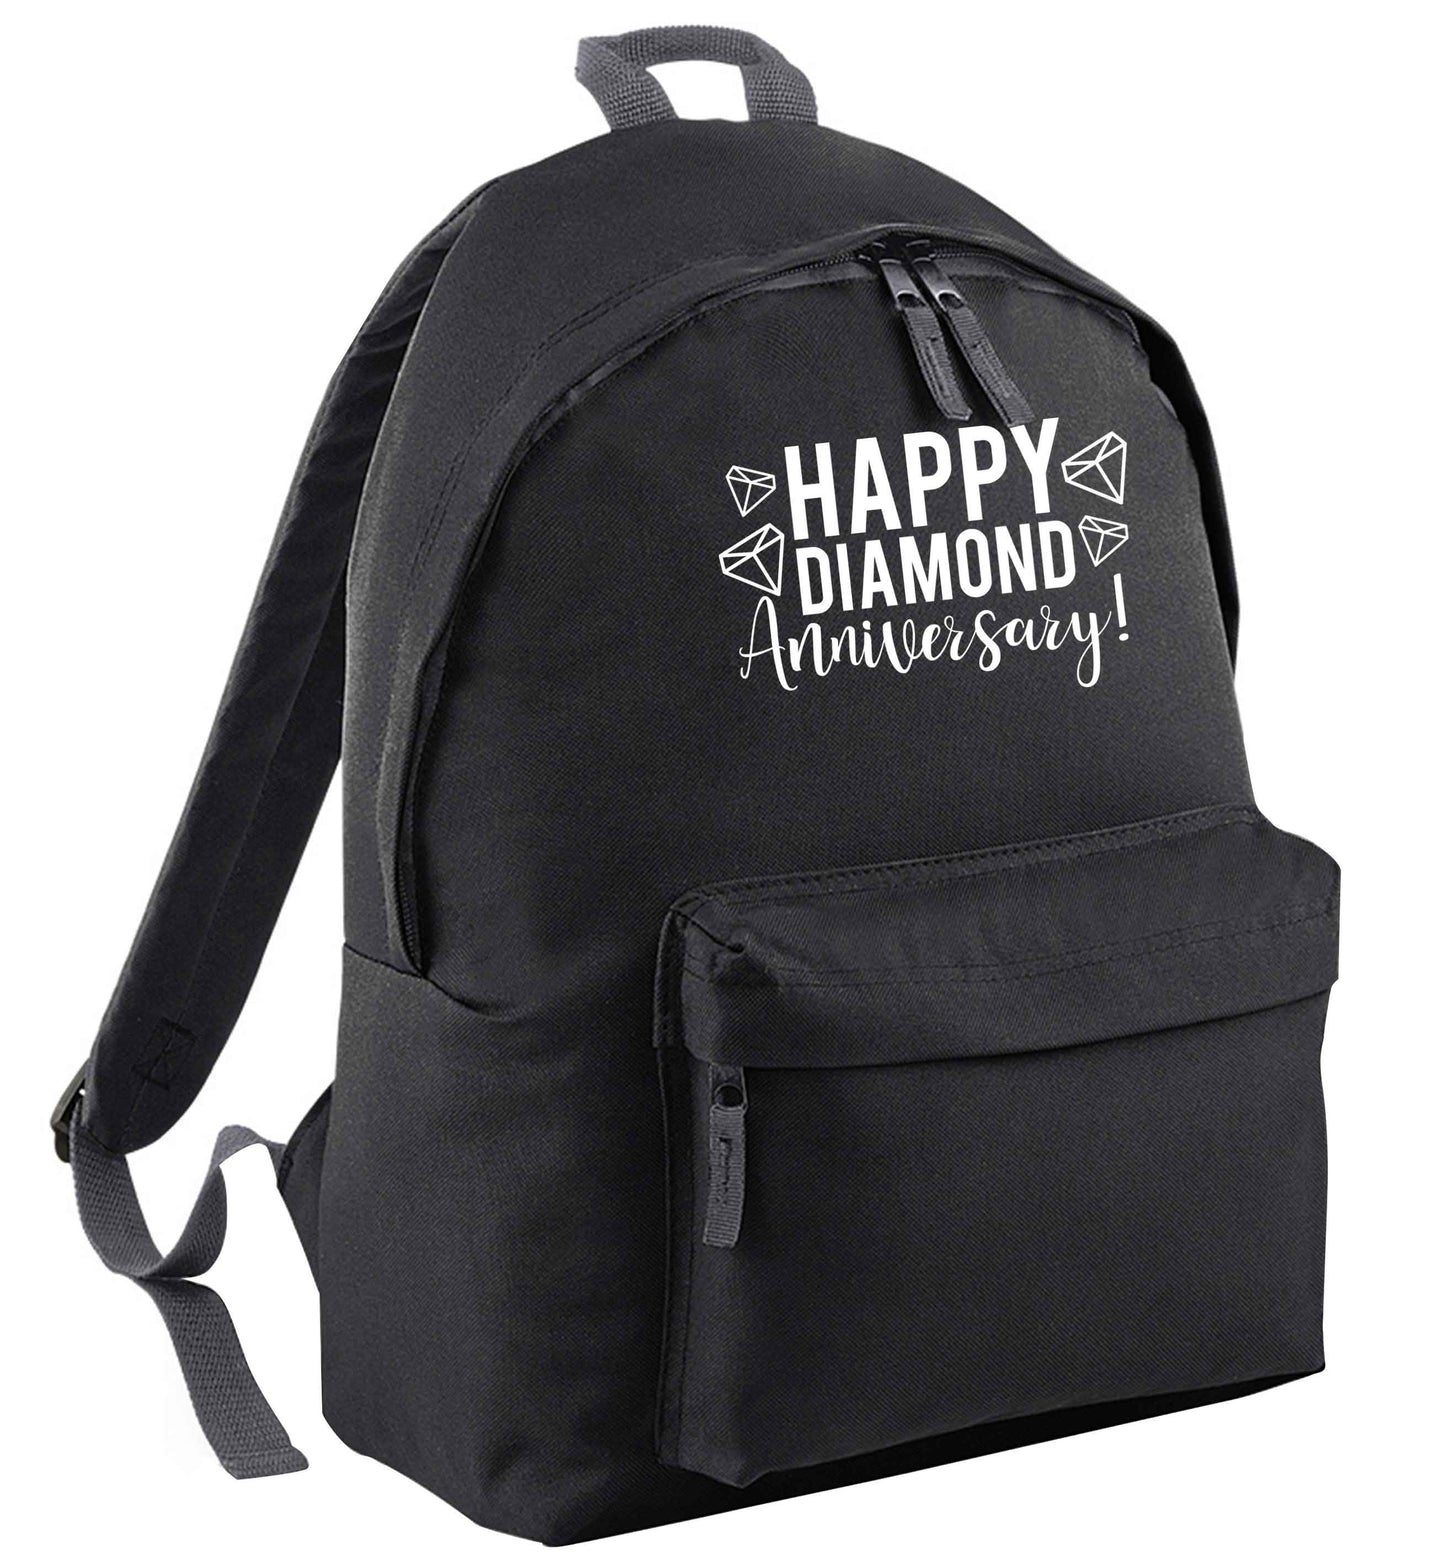 Happy diamond anniversary! | Adults backpack